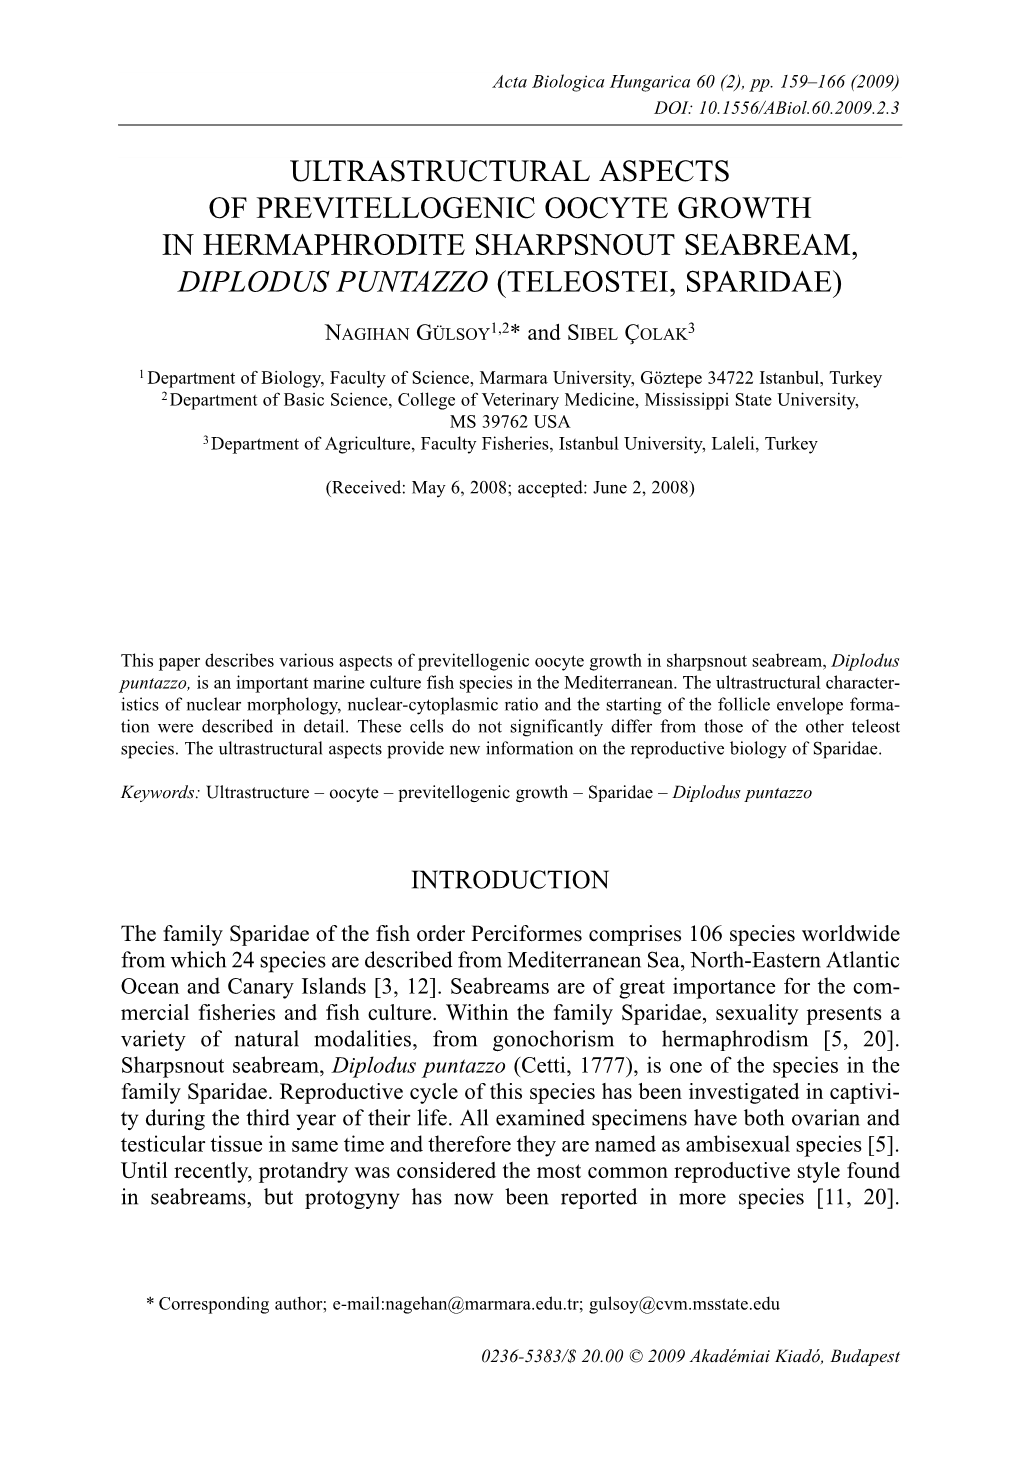 Ultrastructural Aspects of Previtellogenic Oocyte Growth in Hermaphrodite Sharpsnout Seabream, Diplodus Puntazzo (Teleostei, Sparidae)